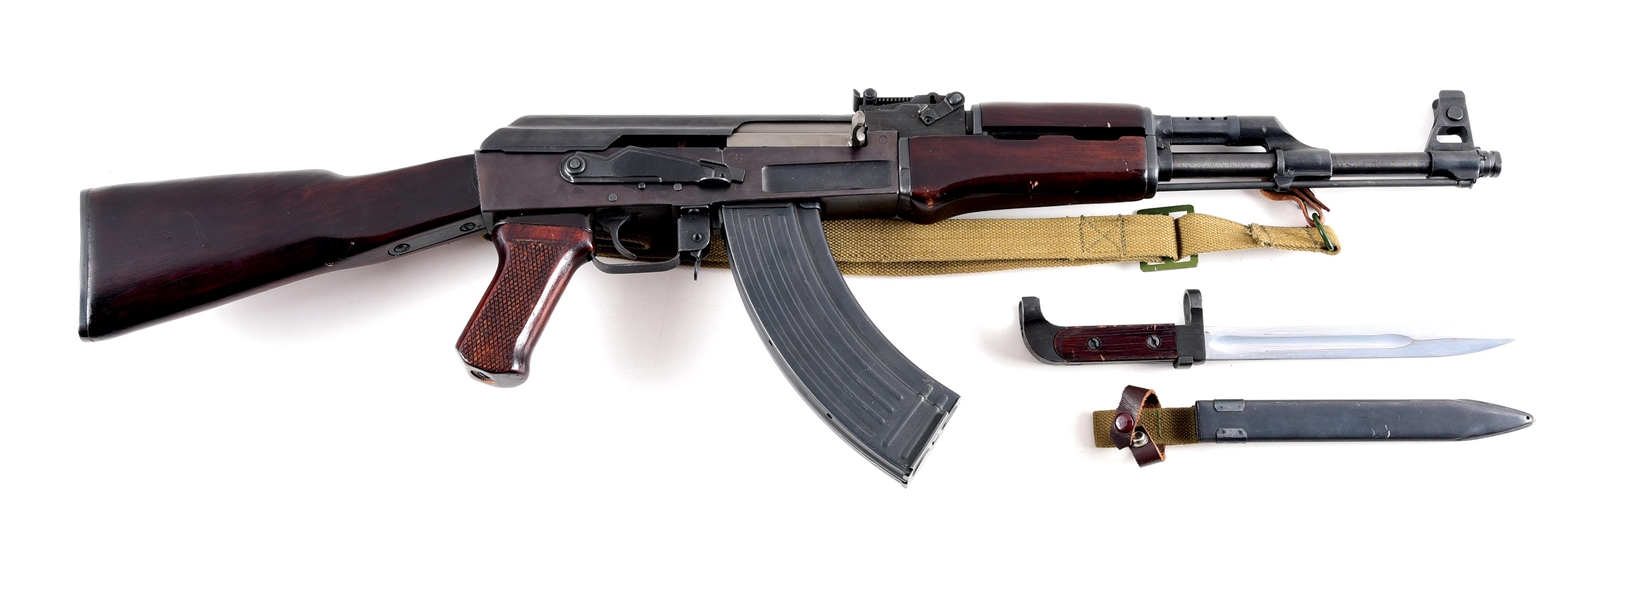 (M) POLY TECHNOLOGIES LEGEND SERIES AK-47/S SEMI-AUTOMATIC RIFLE. 